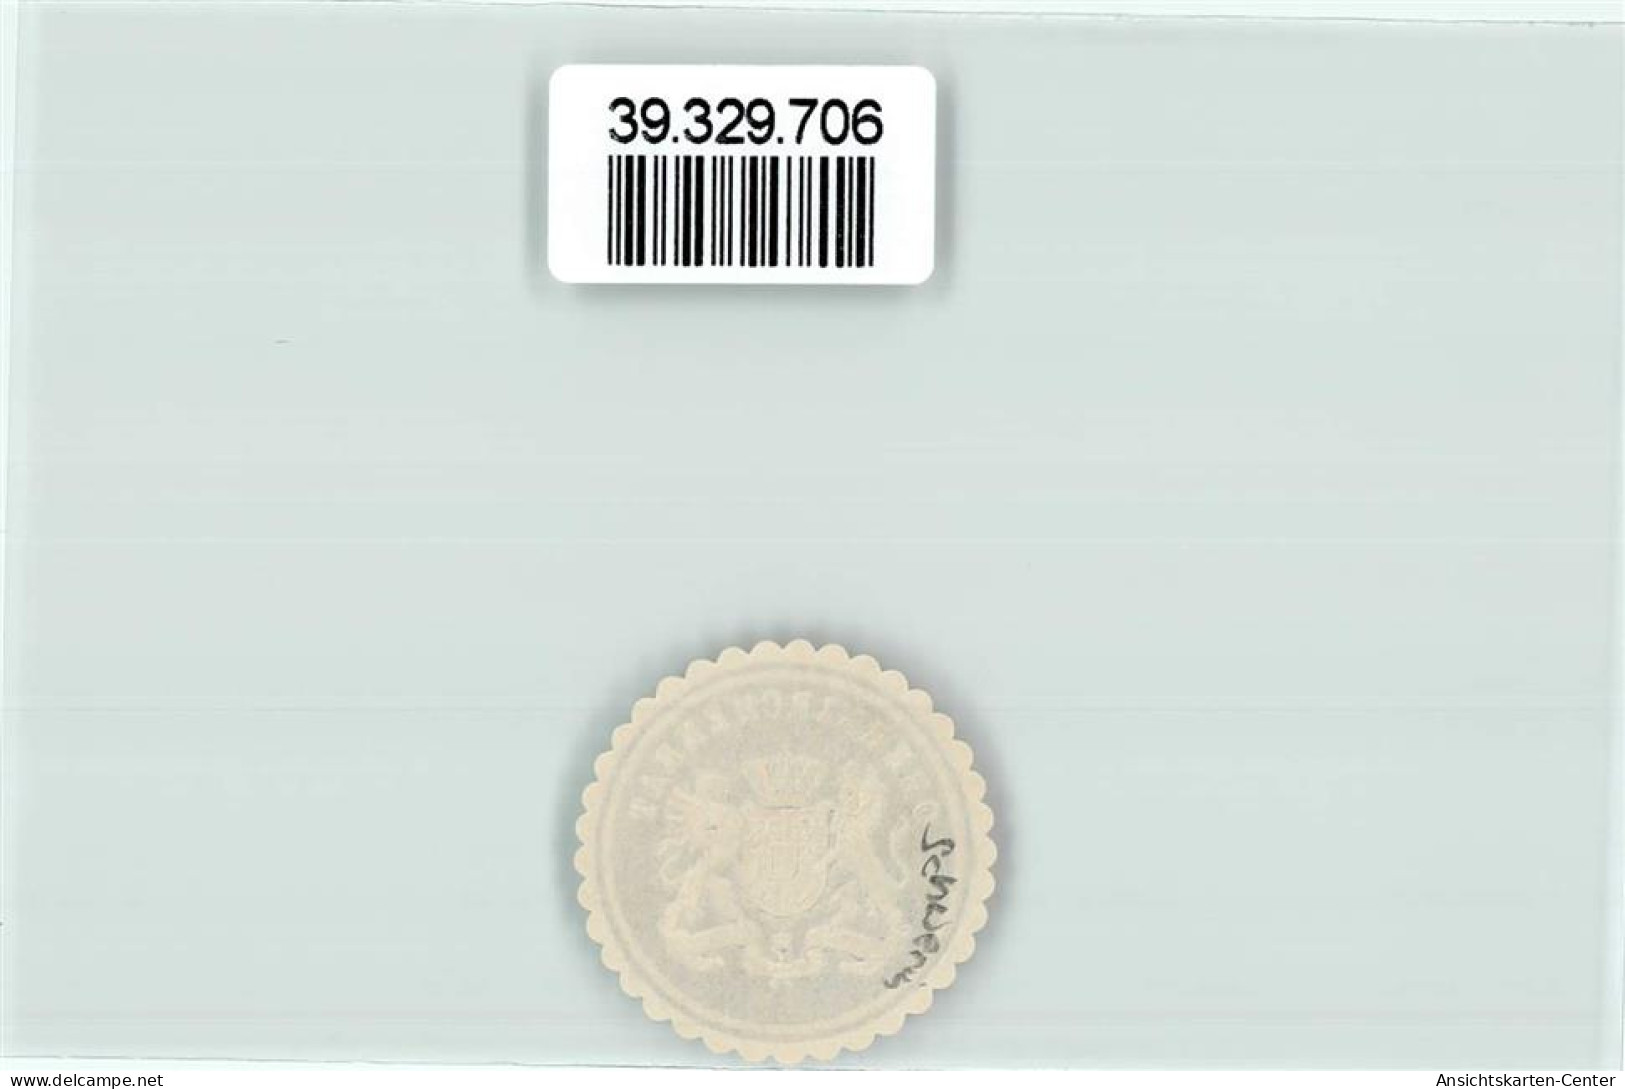 39329706 - Oberkirchenrat - Postzegels (afbeeldingen)